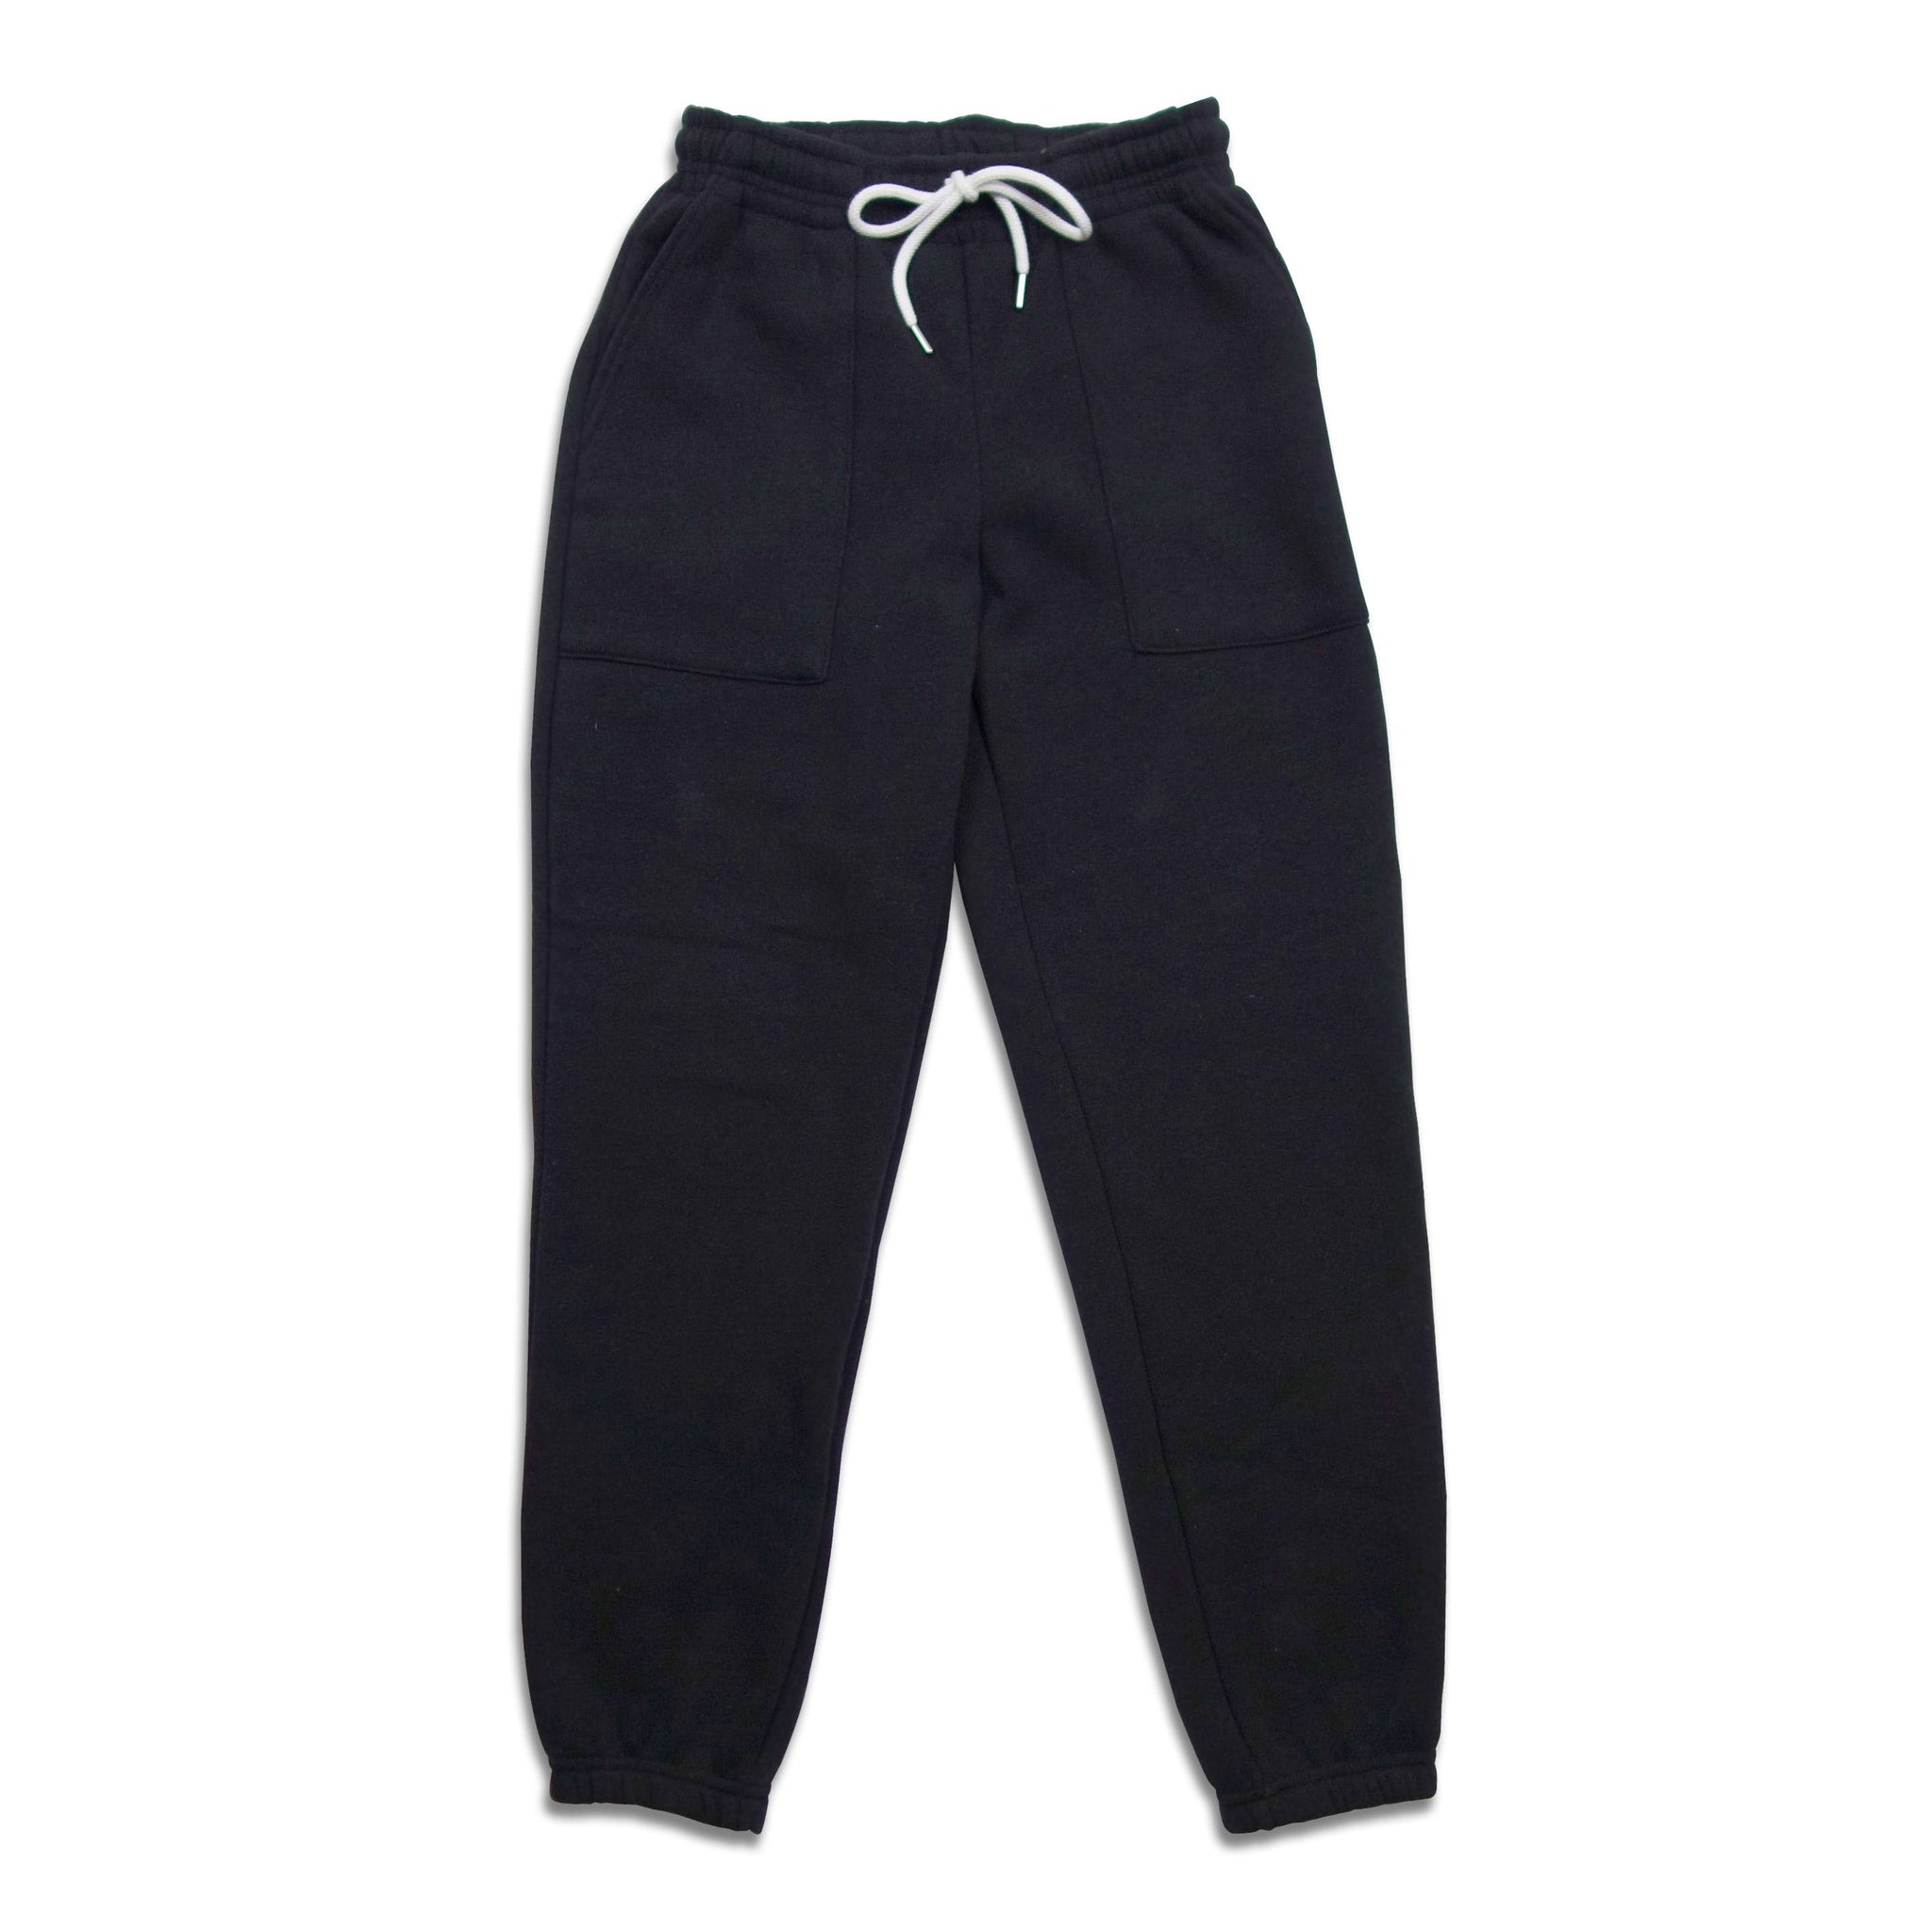 Tri-Blend Sweatpants with Pockets Basics Black